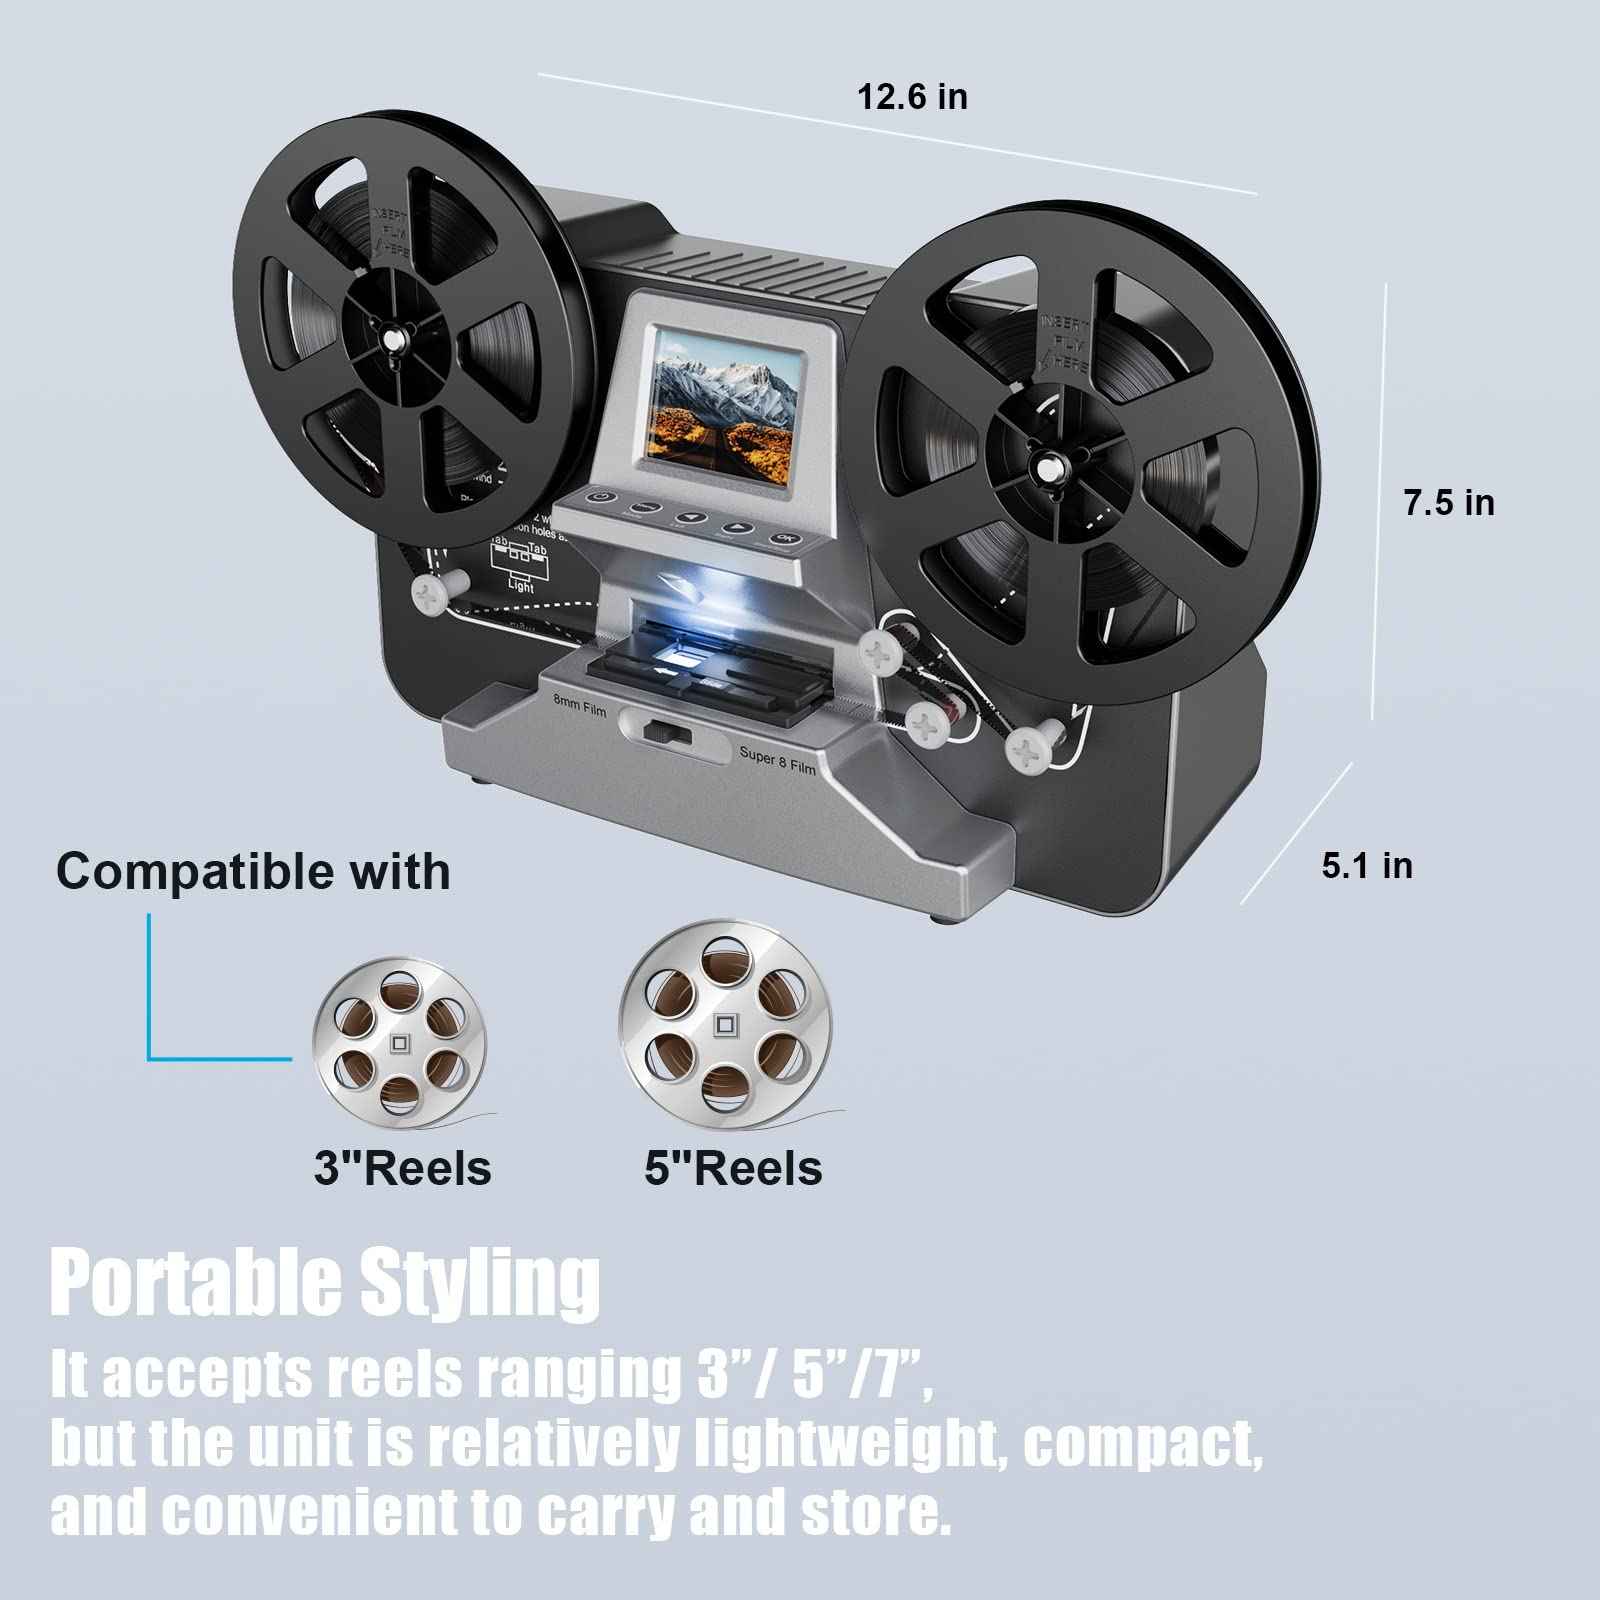 8mm & Super 8 Reels to Digital MovieMaker Film Sanner Converter, Pro Film  Digitizer Machine with 2.4 LCD, Black (Convert 3 inch and 5 inch 8mm Super